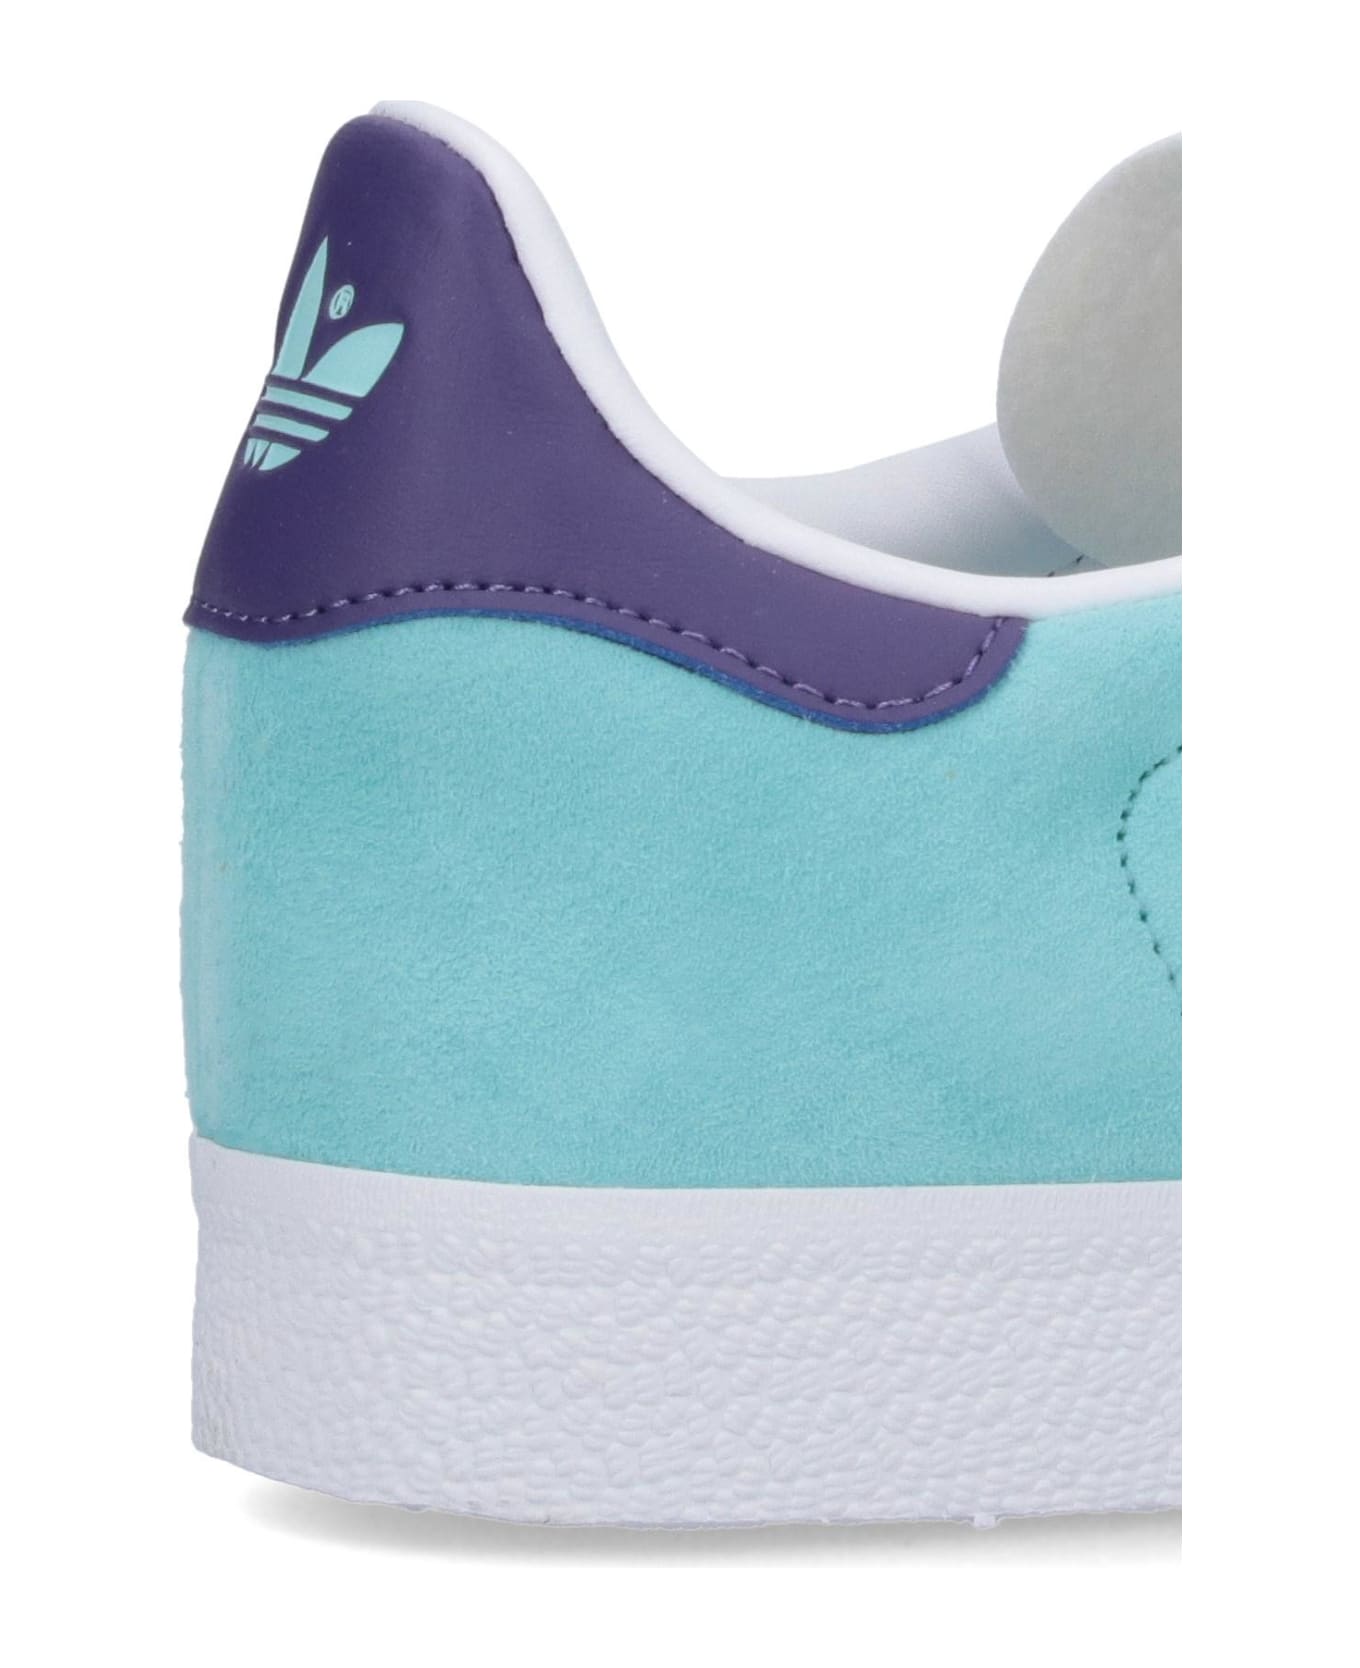 Adidas Originals Gazelle Sneakers - Light Blue